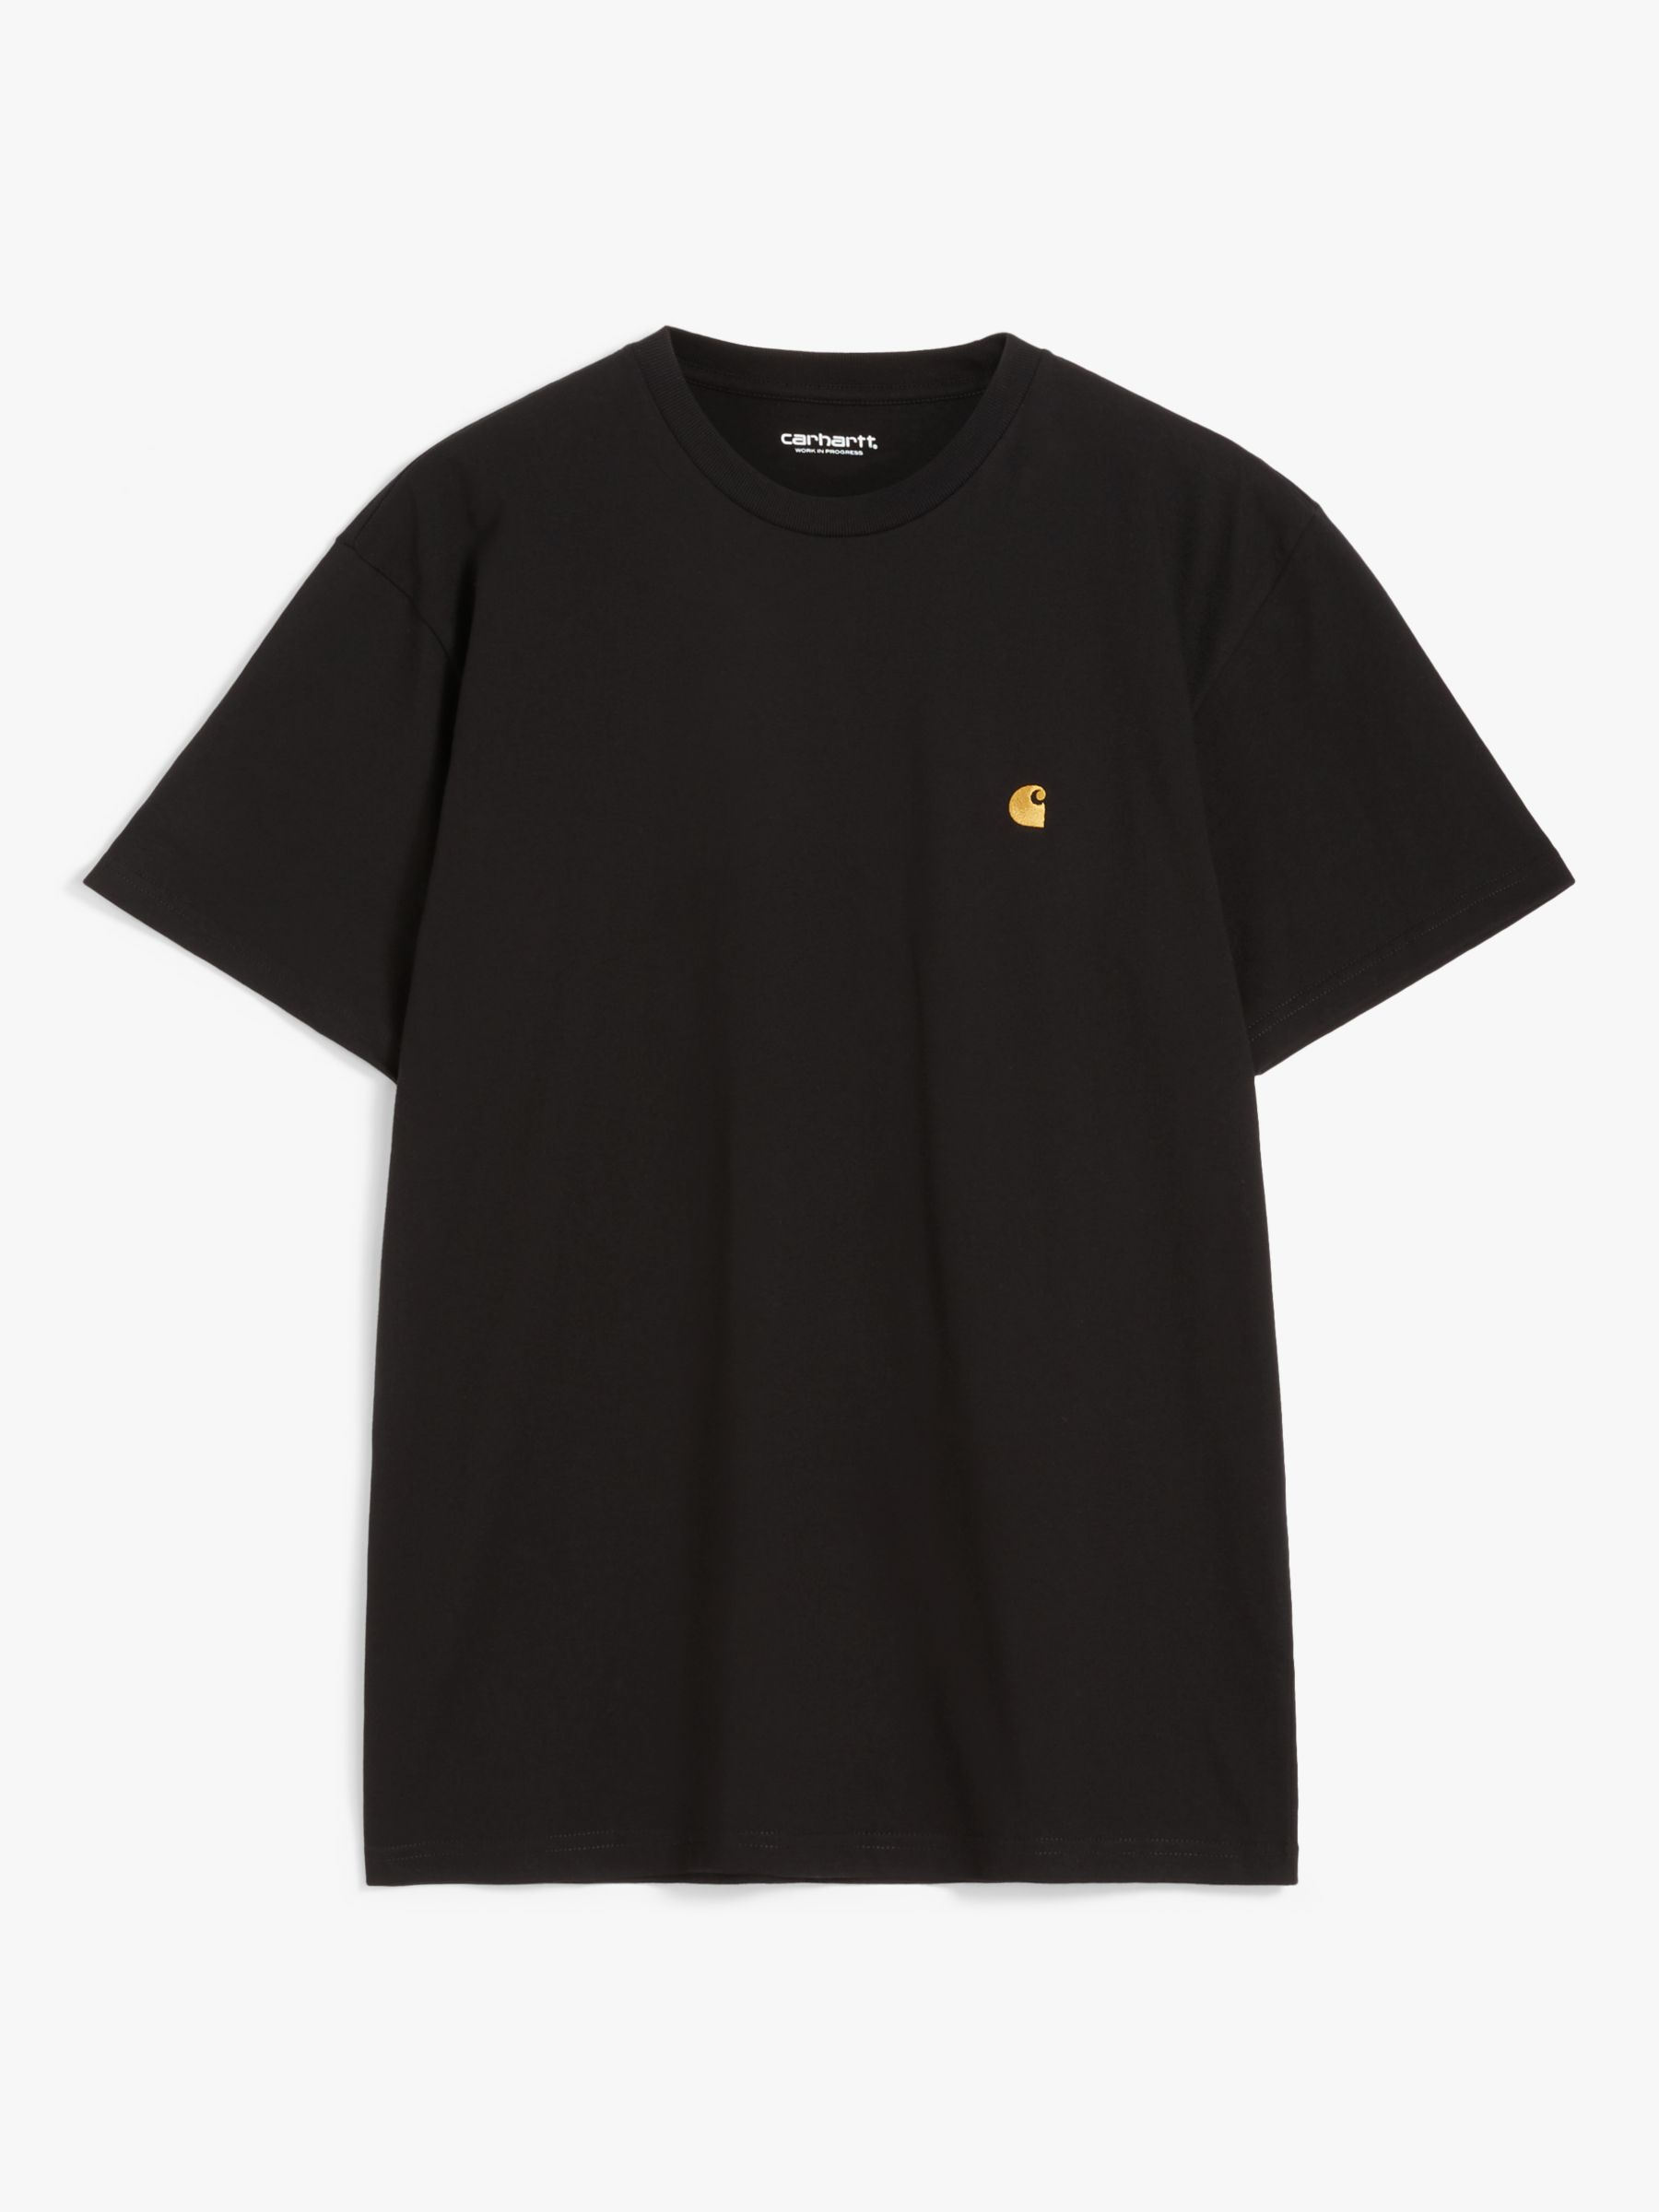 Carhartt WIP Chase Short Sleeve T-Shirt, Black at John Lewis & Partners